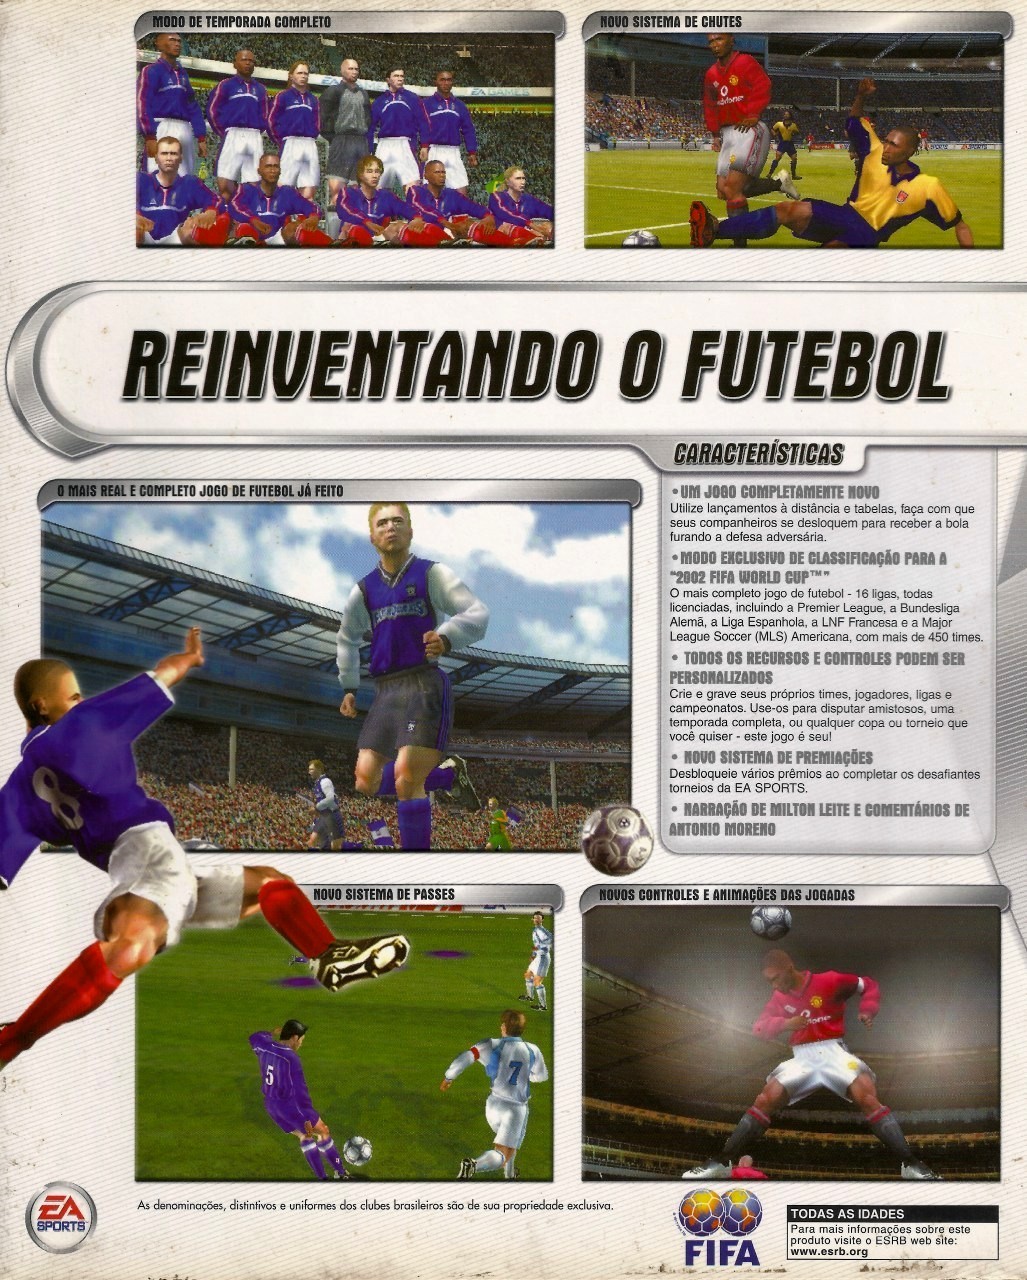 FIFA Soccer 2002: Major League Soccer cover